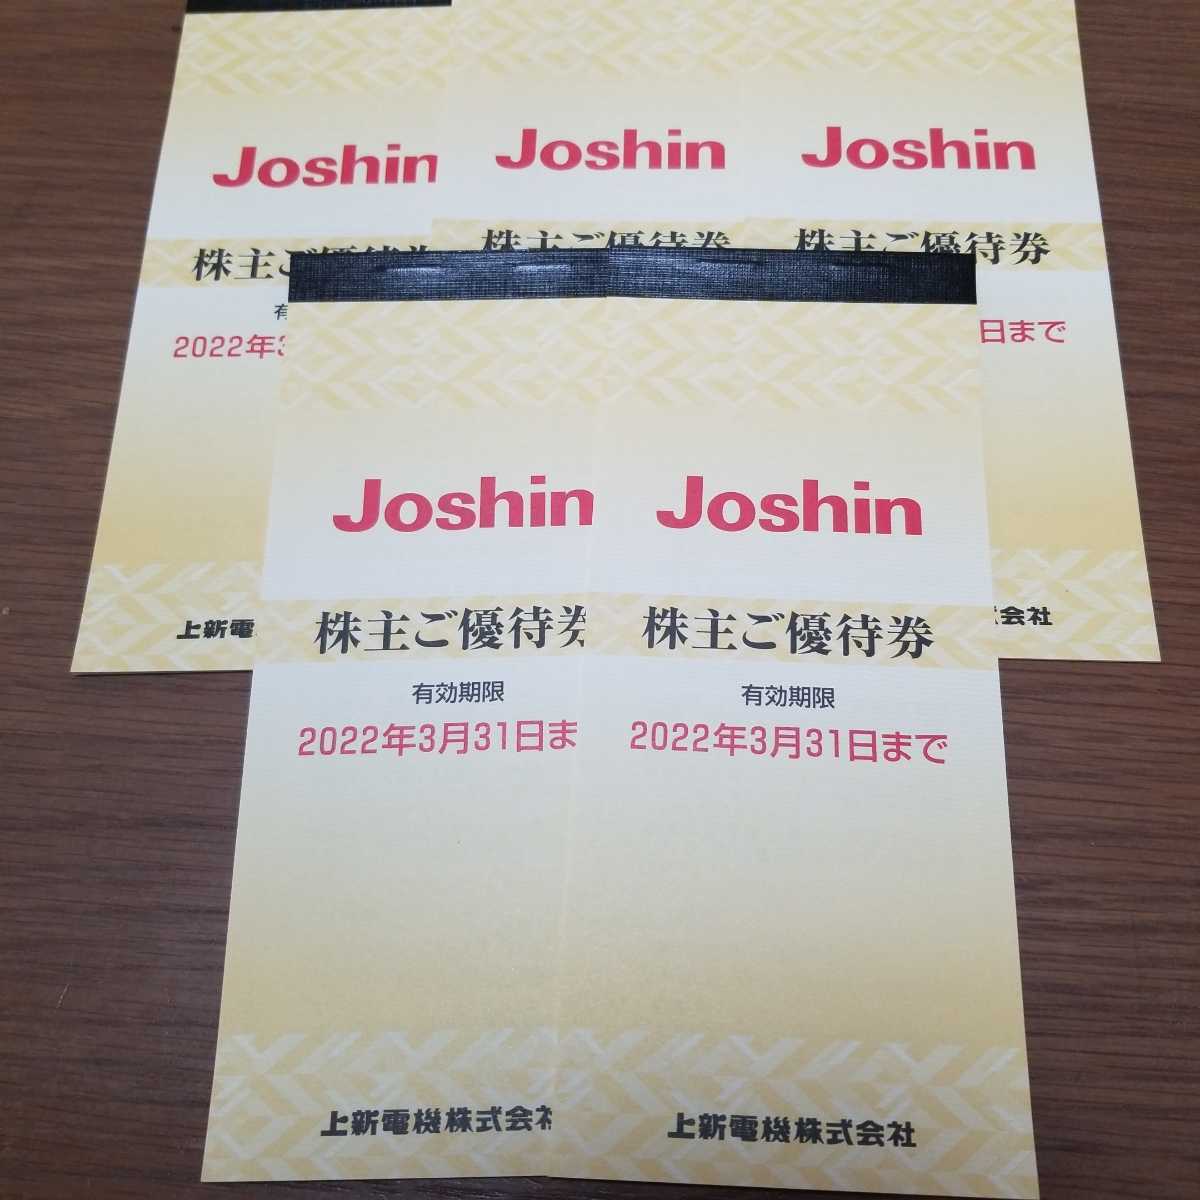 Joshin 株主優待券 10万分 最愛 sandorobotics.com